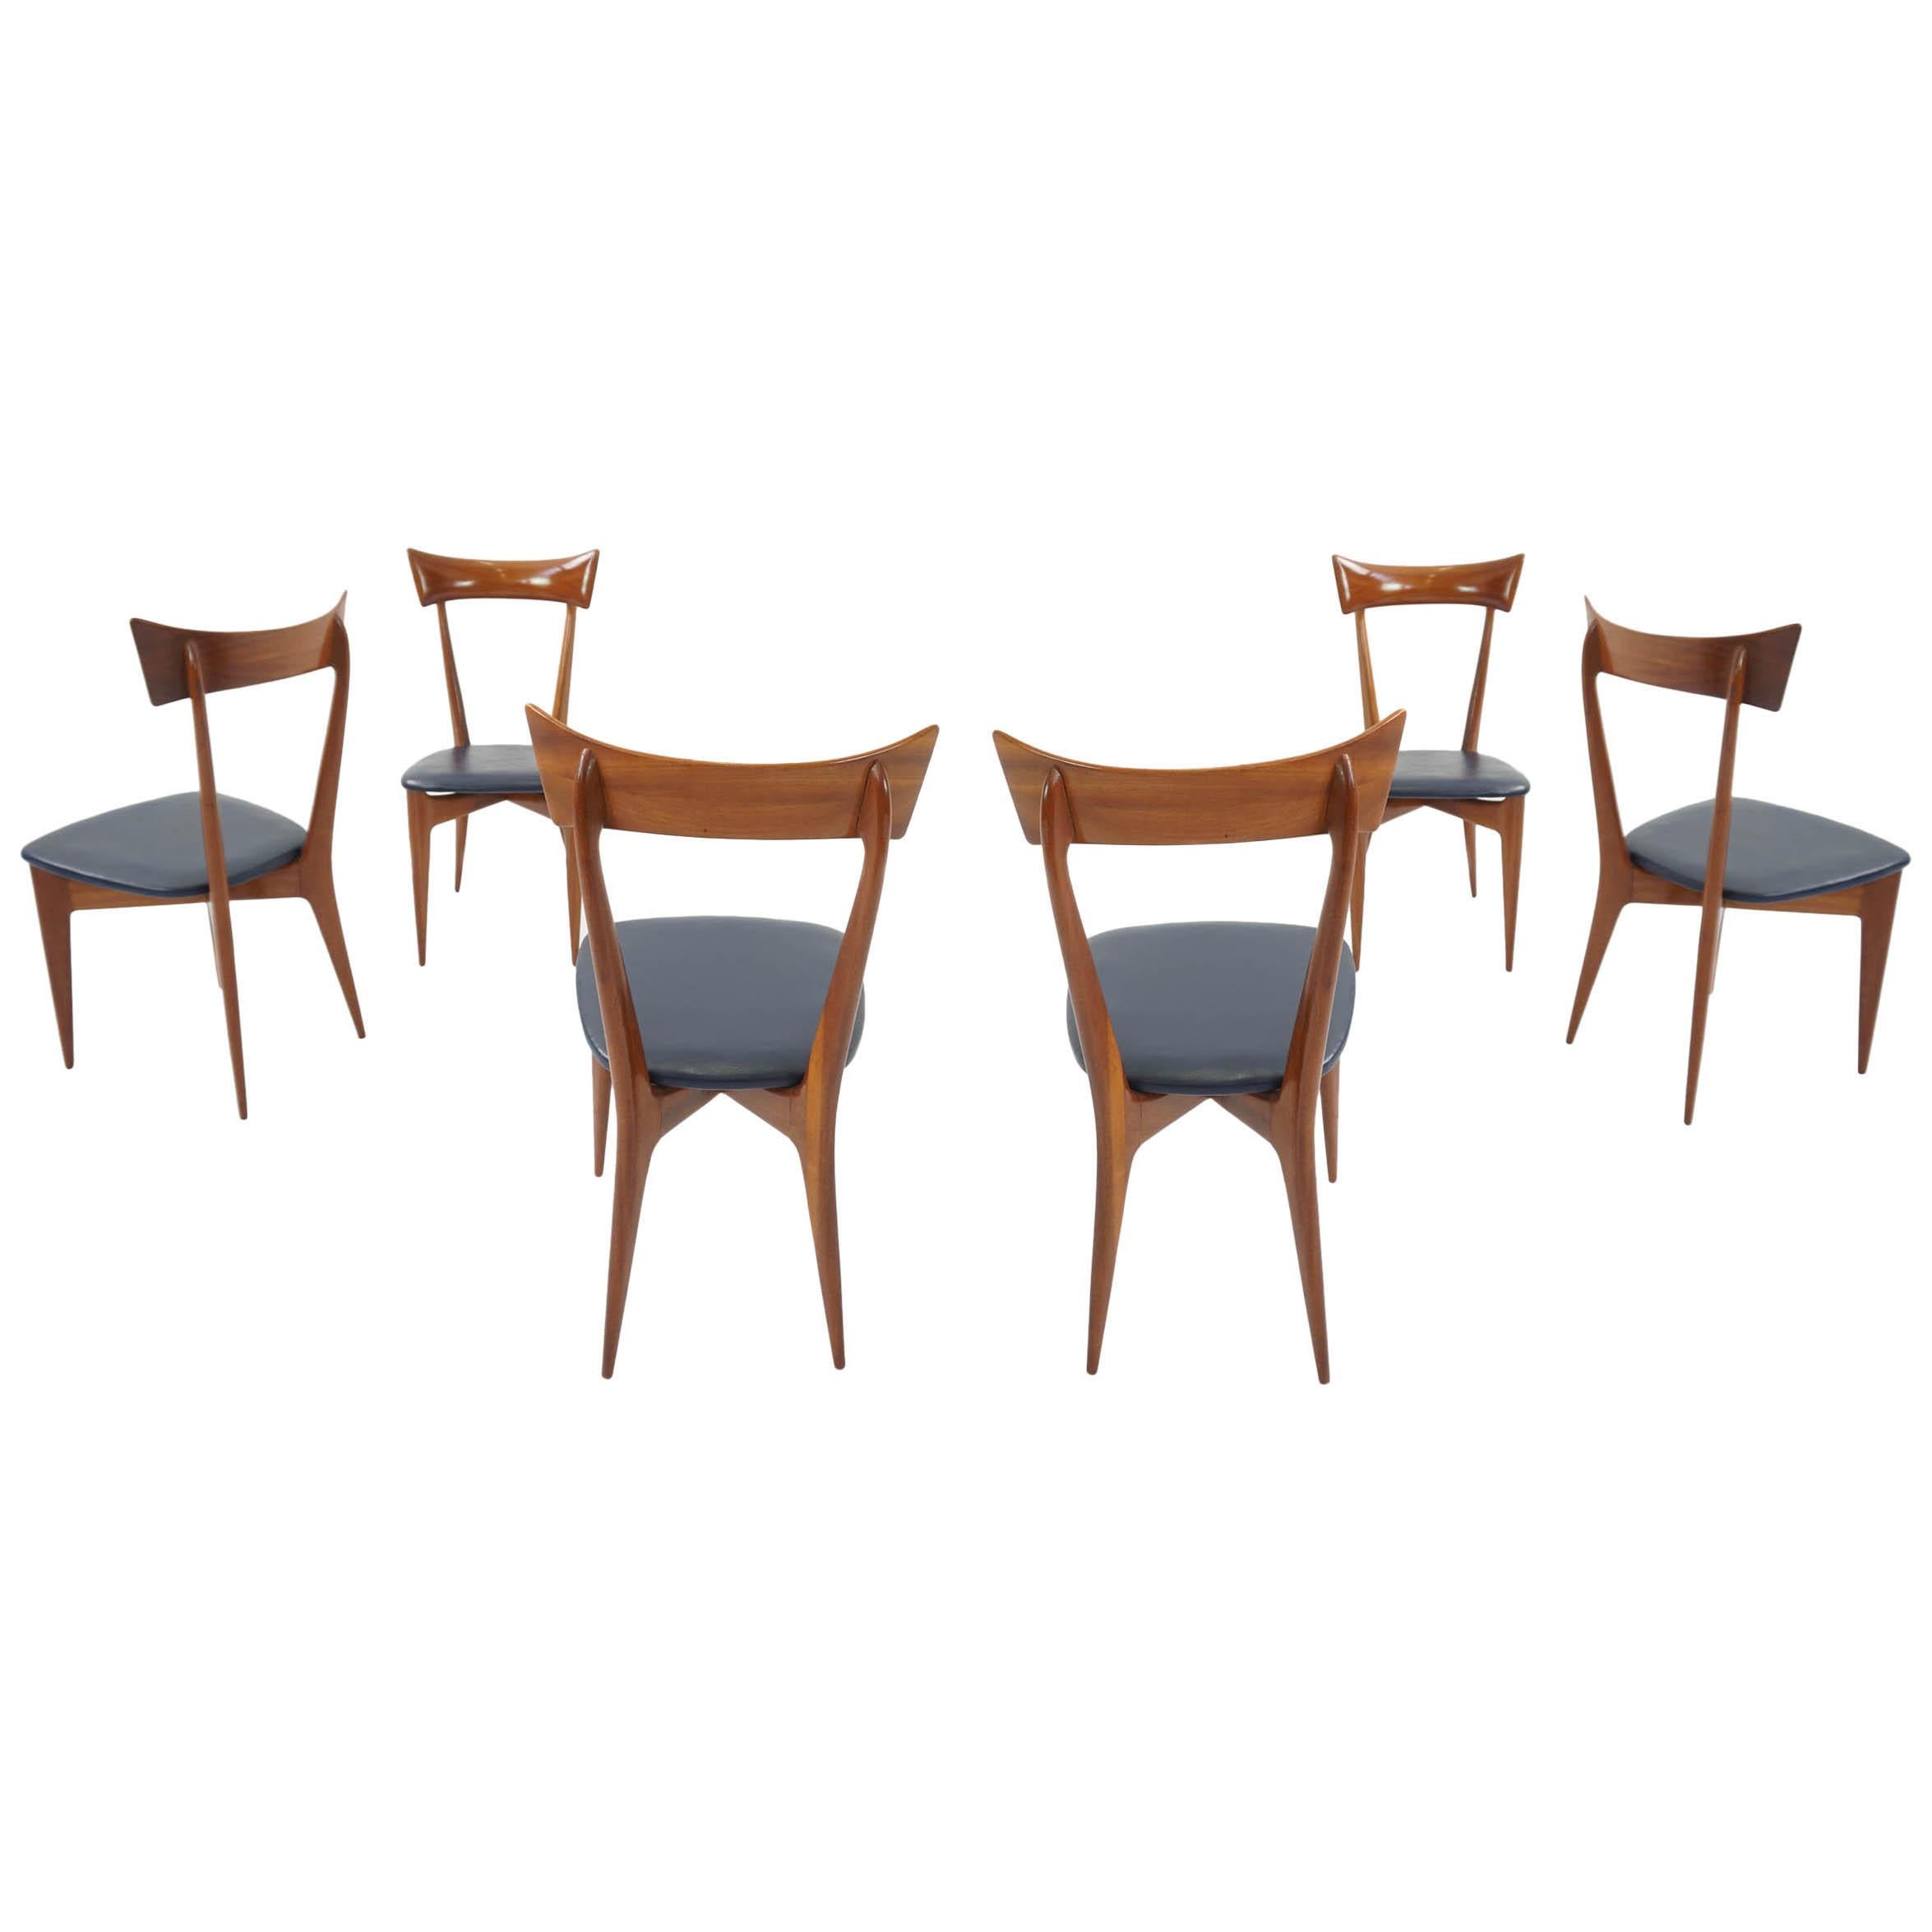 Ico Parisi and Luisa Parisi set of 6 Chairs for Ariberto Colombo